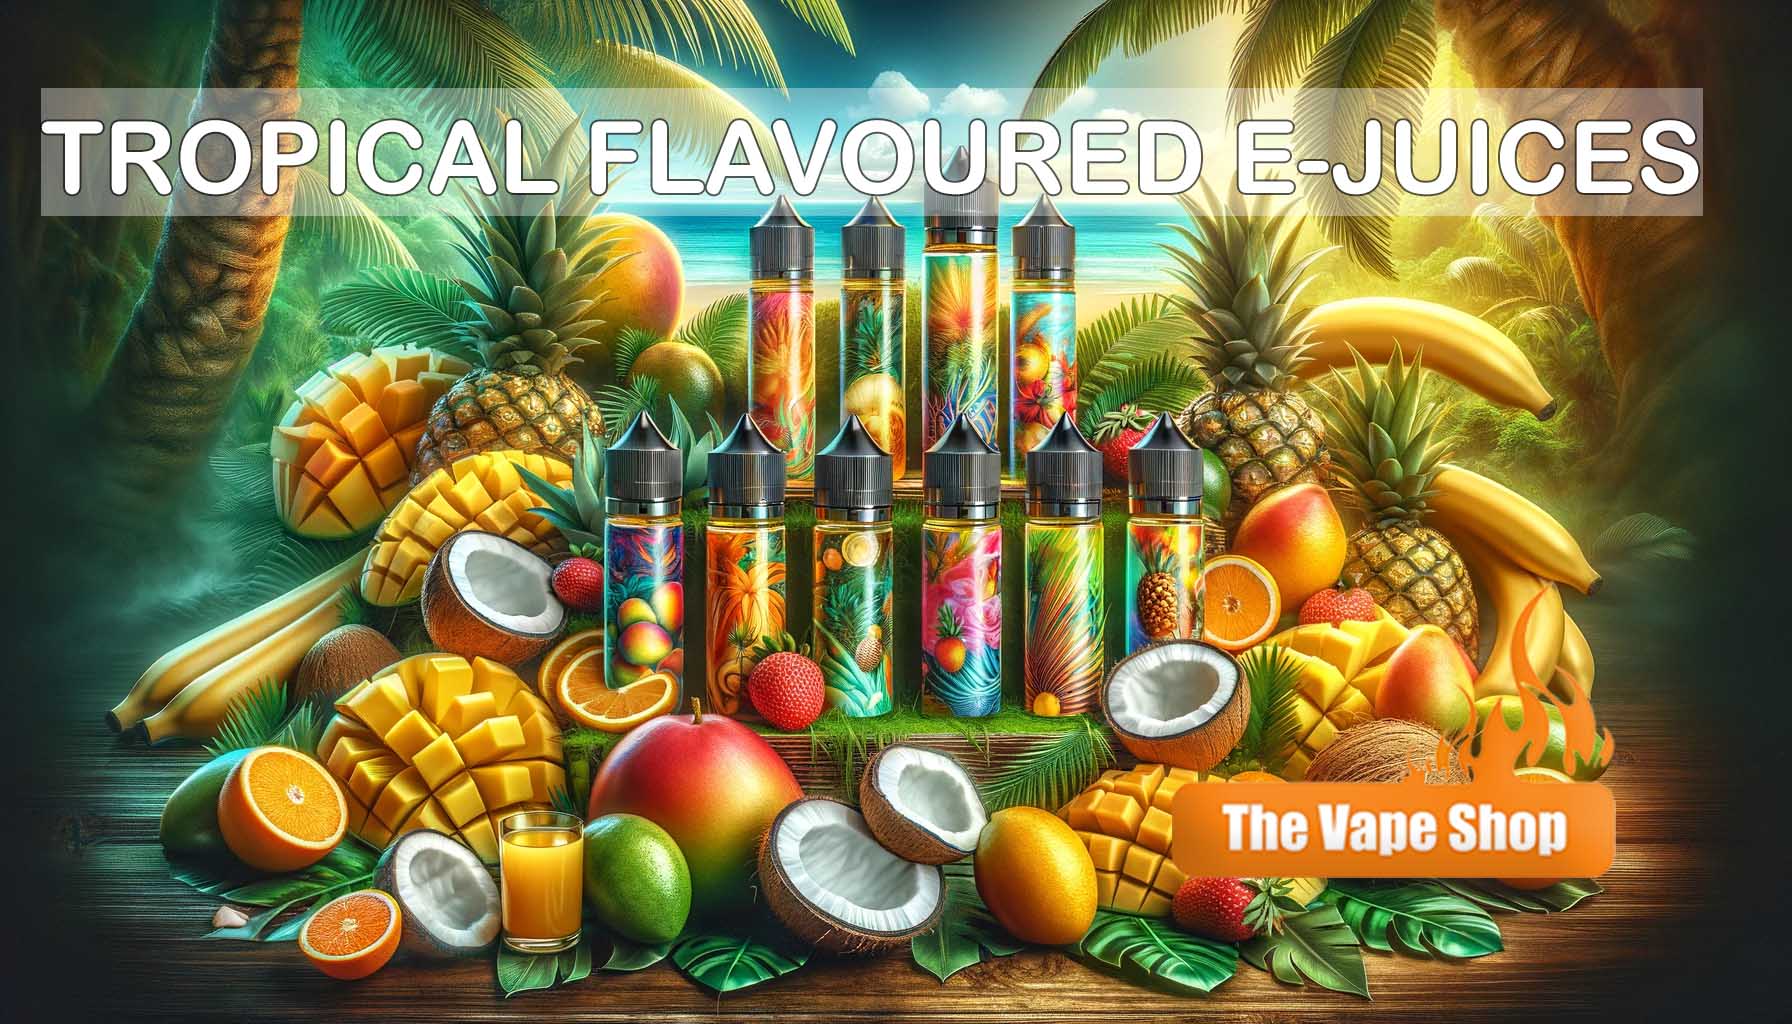 Tropical Flavoured E-Liquids by The Vape Shop